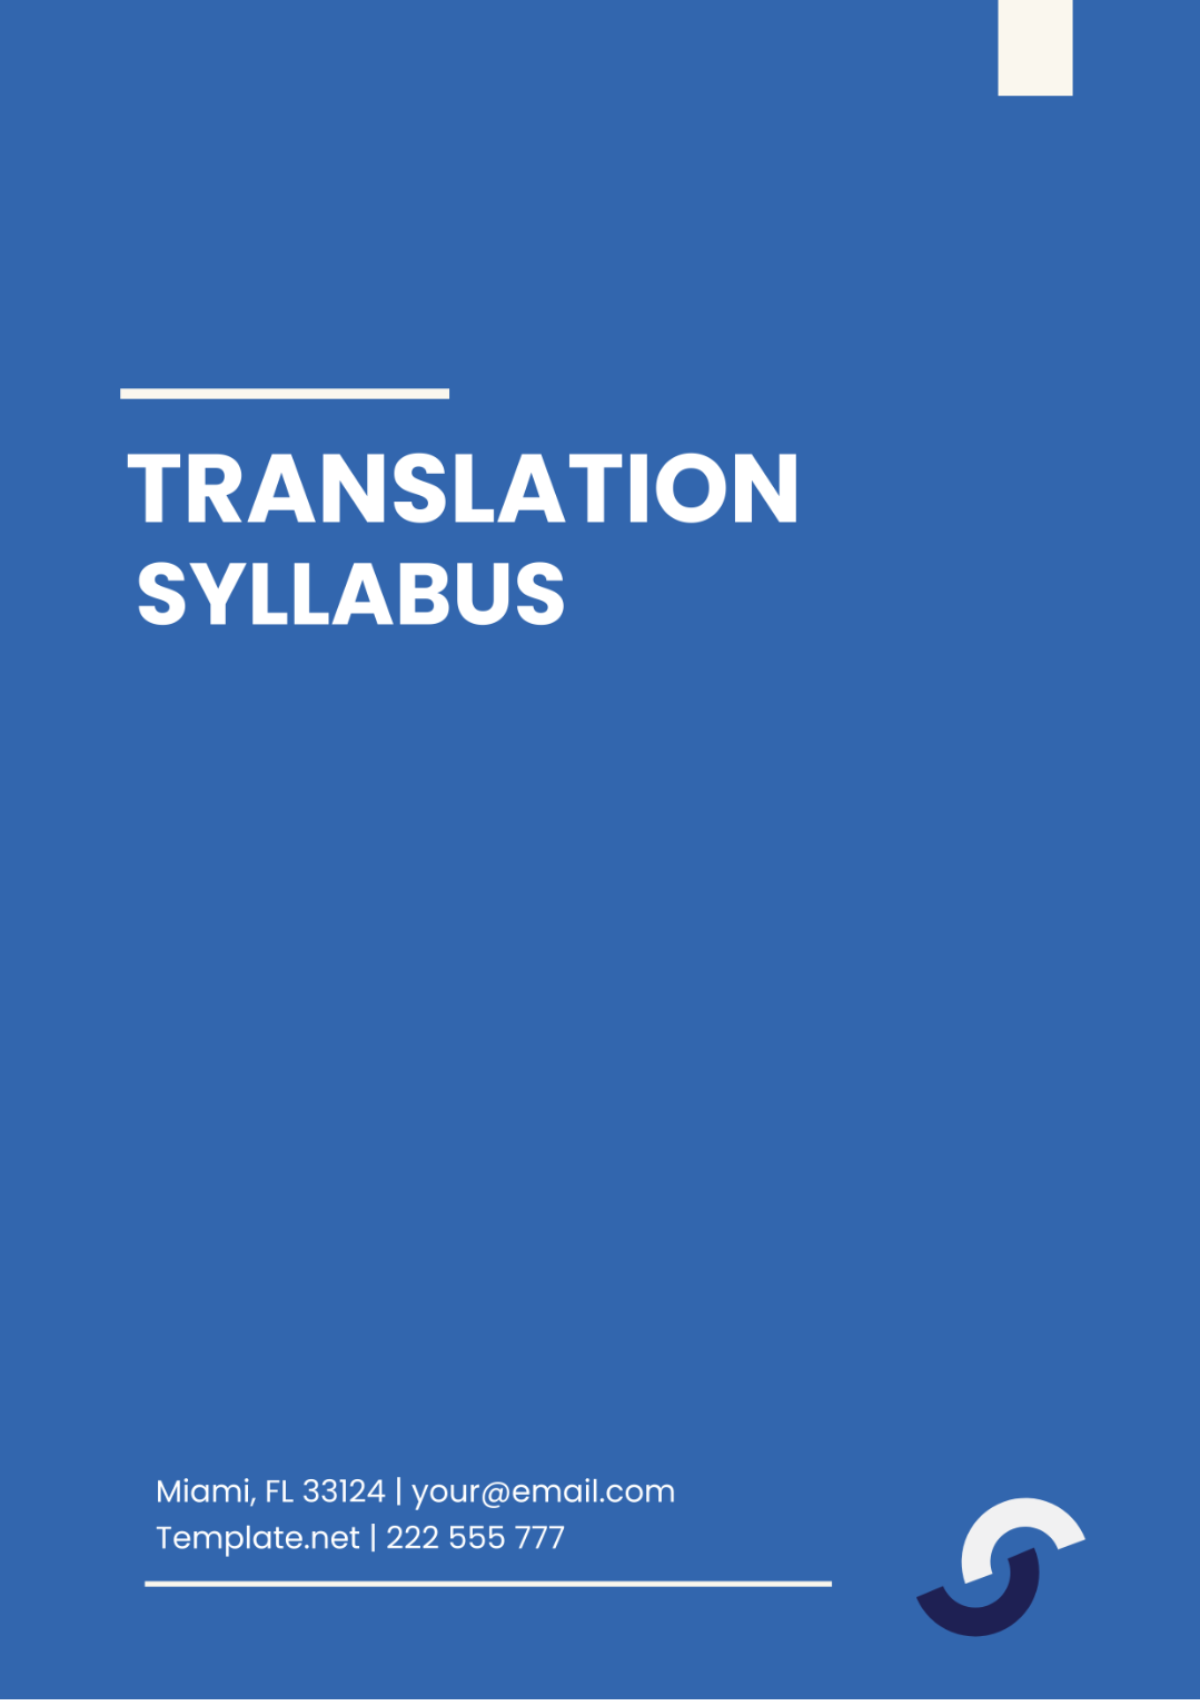 Translation Syllabus Template